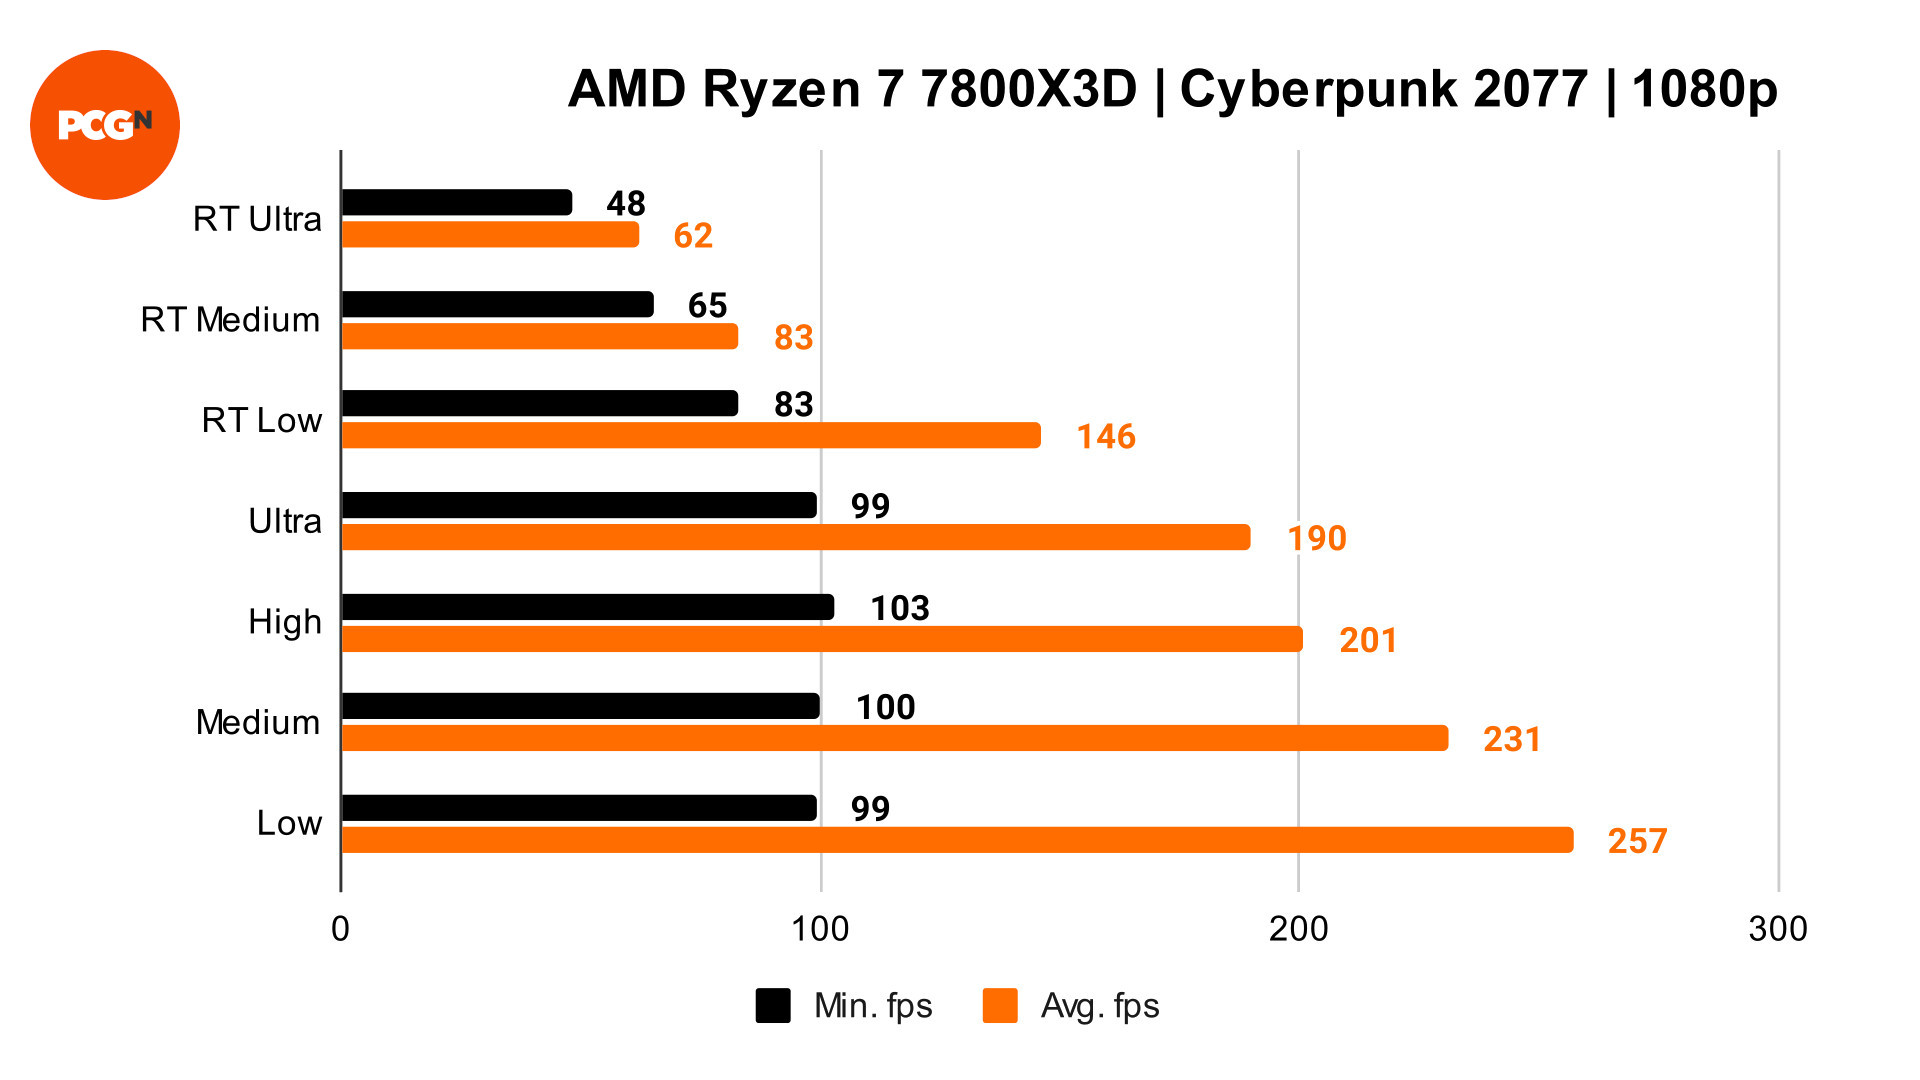 AMD Ryzen 7 5800X3D shines in gaming benchmarks, beats Intel